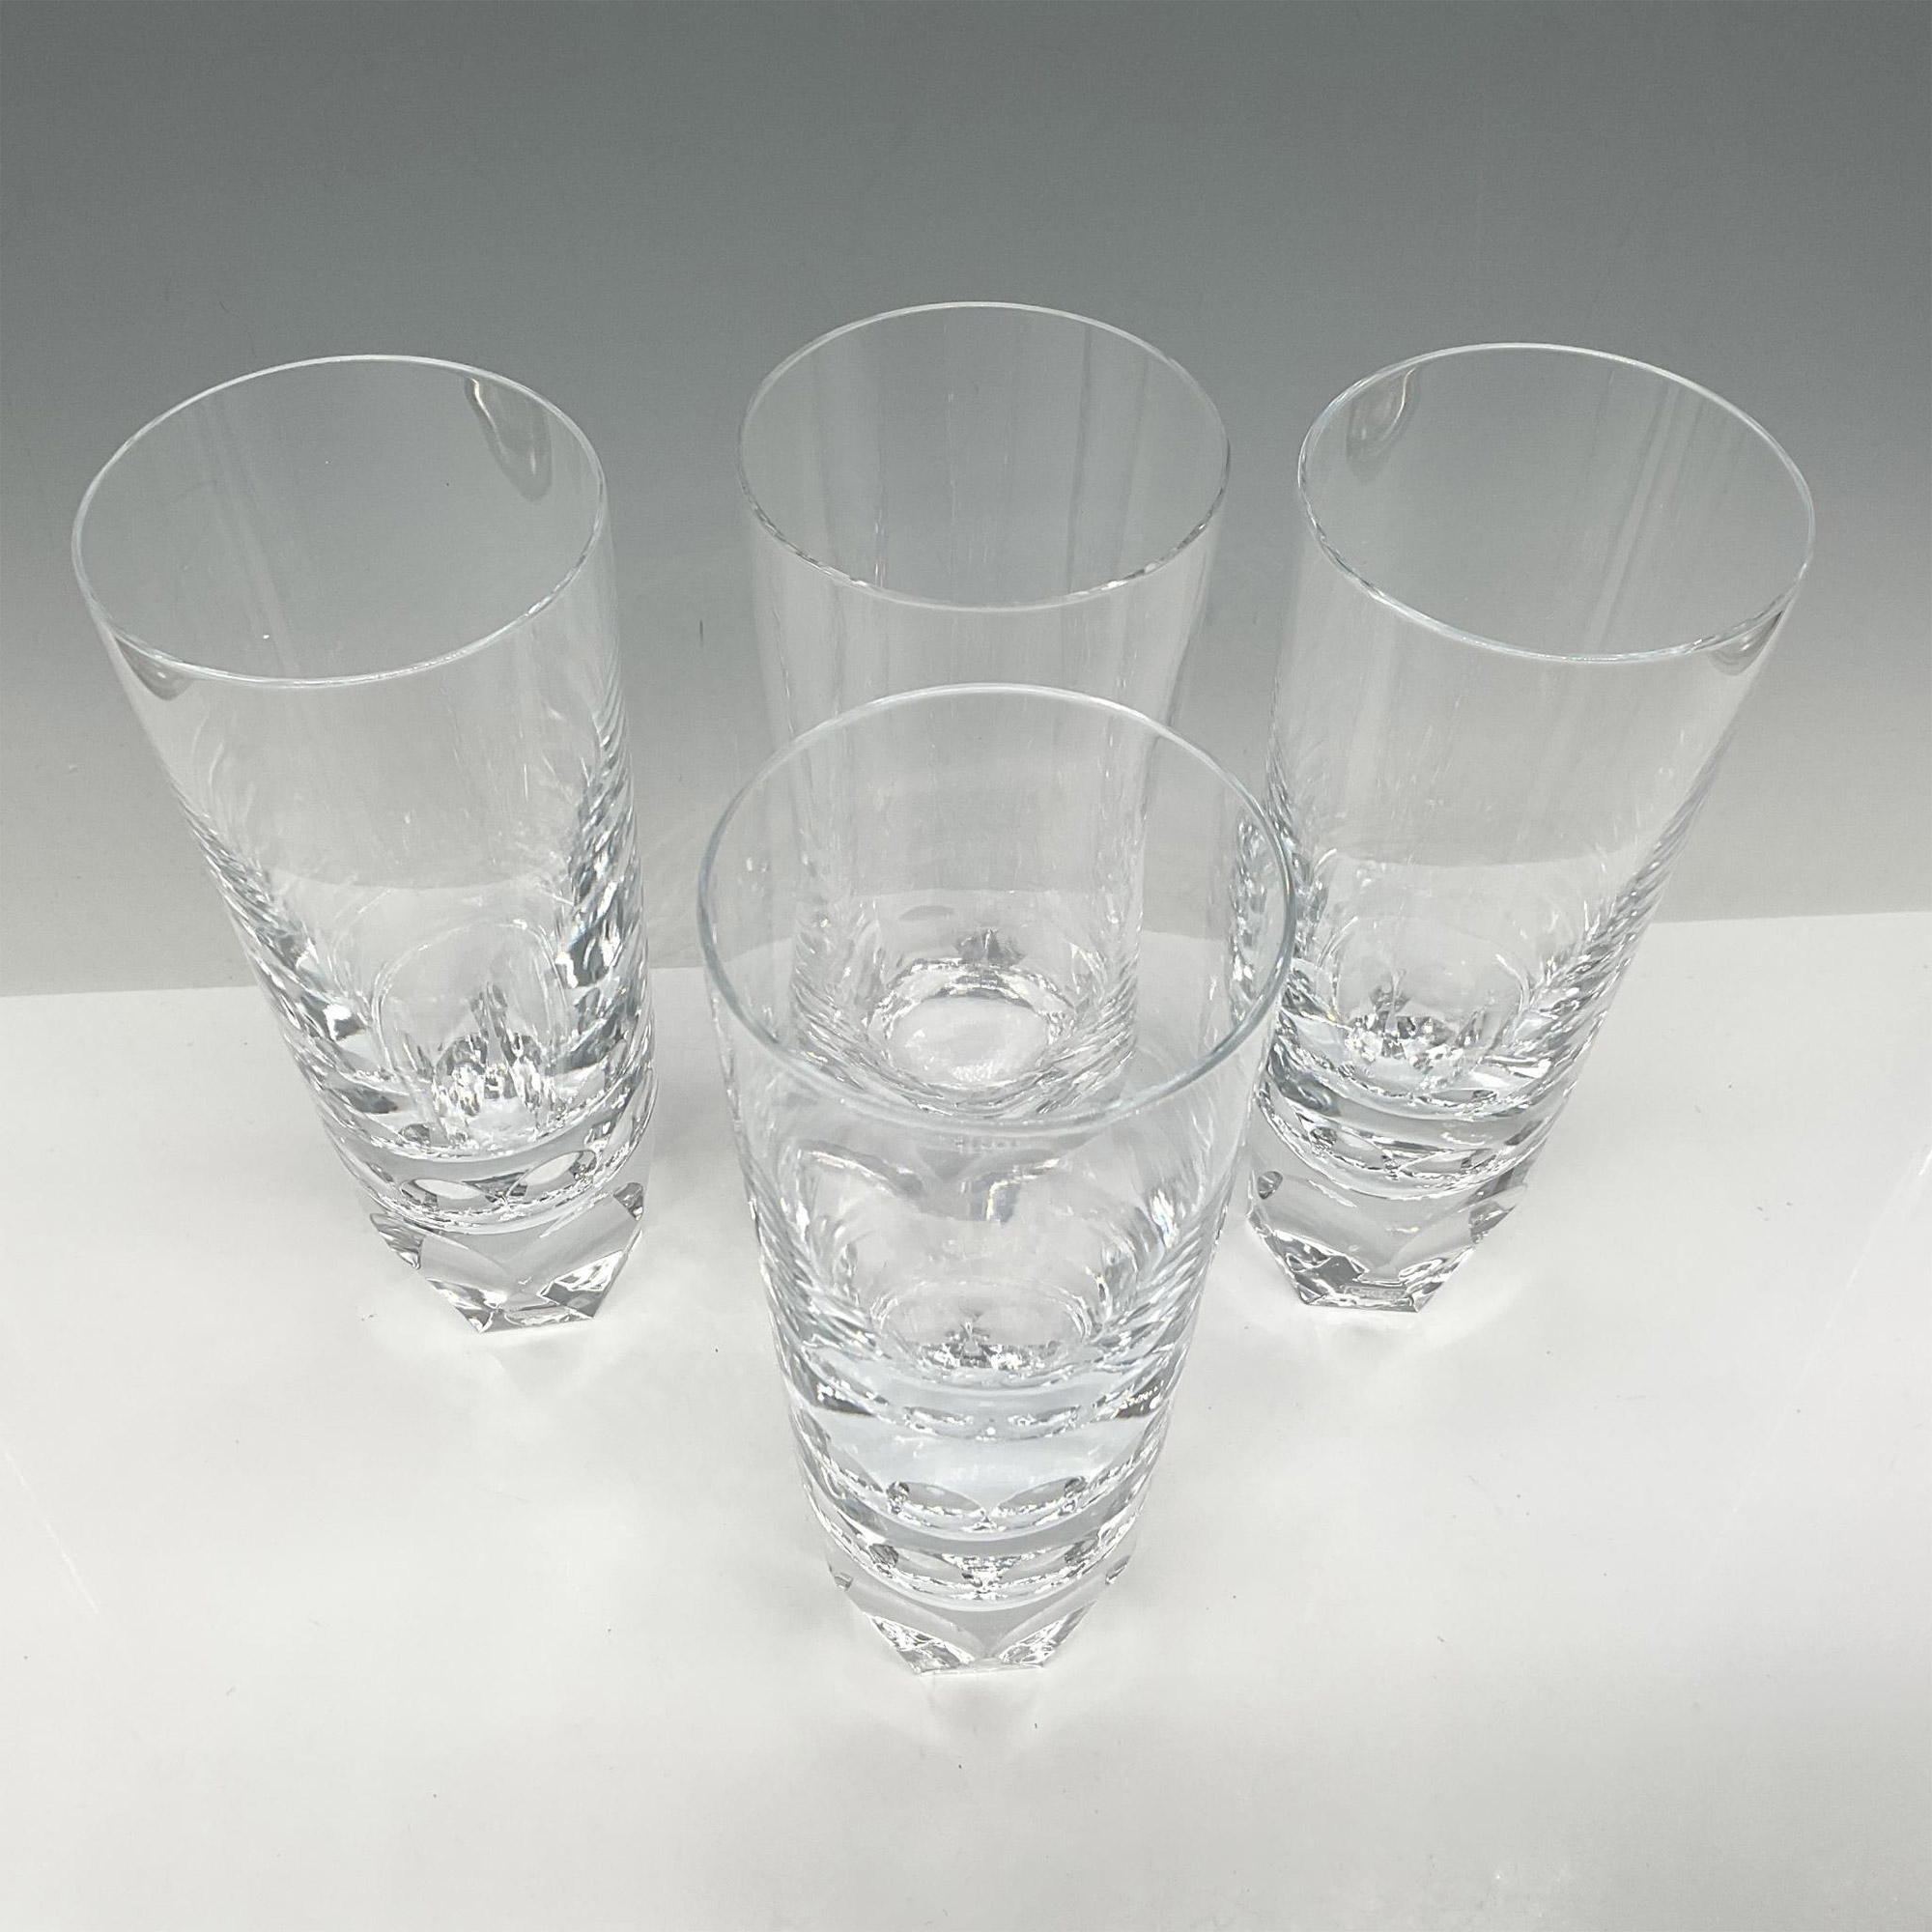 Orrefors Crystal Carat Highball Glasses, Set of 4 - Image 2 of 4